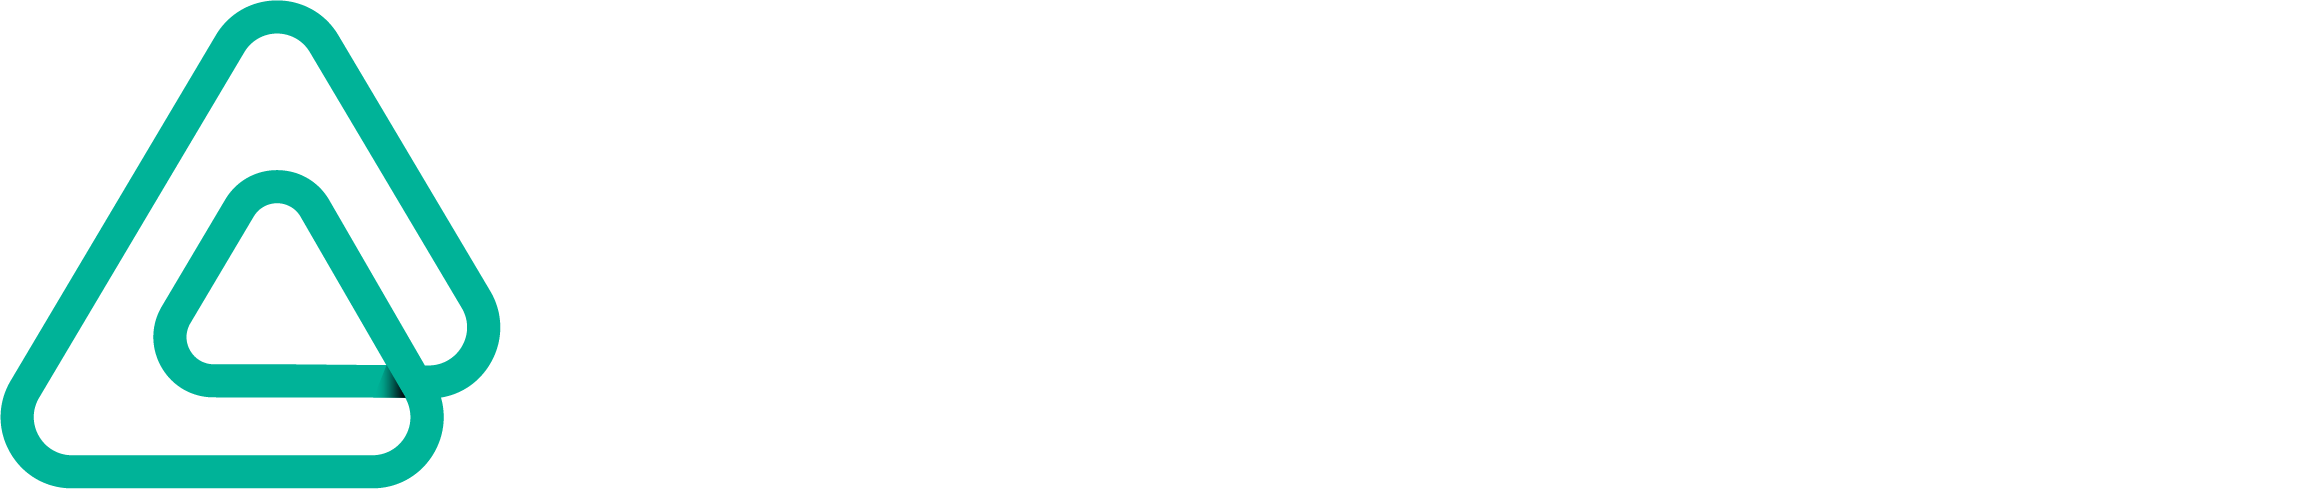 AboveBoard logo